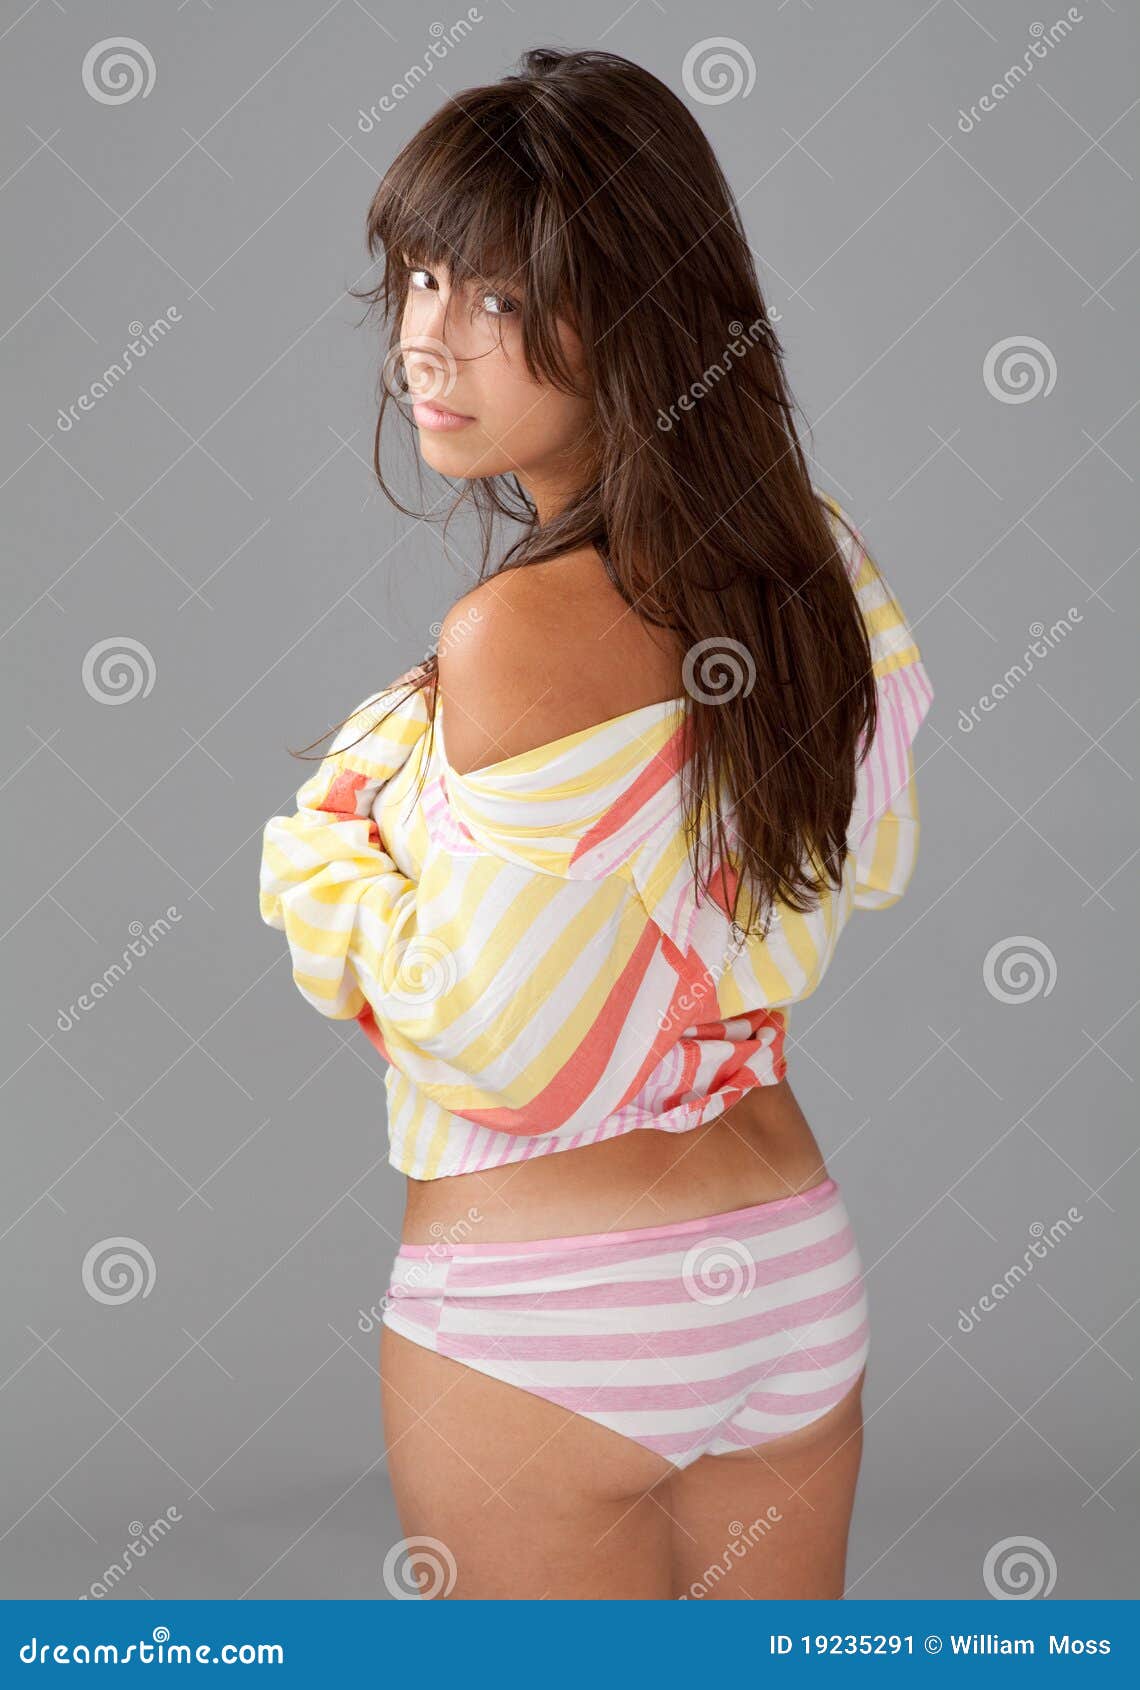 Best of Pictures of girls wearing underwear